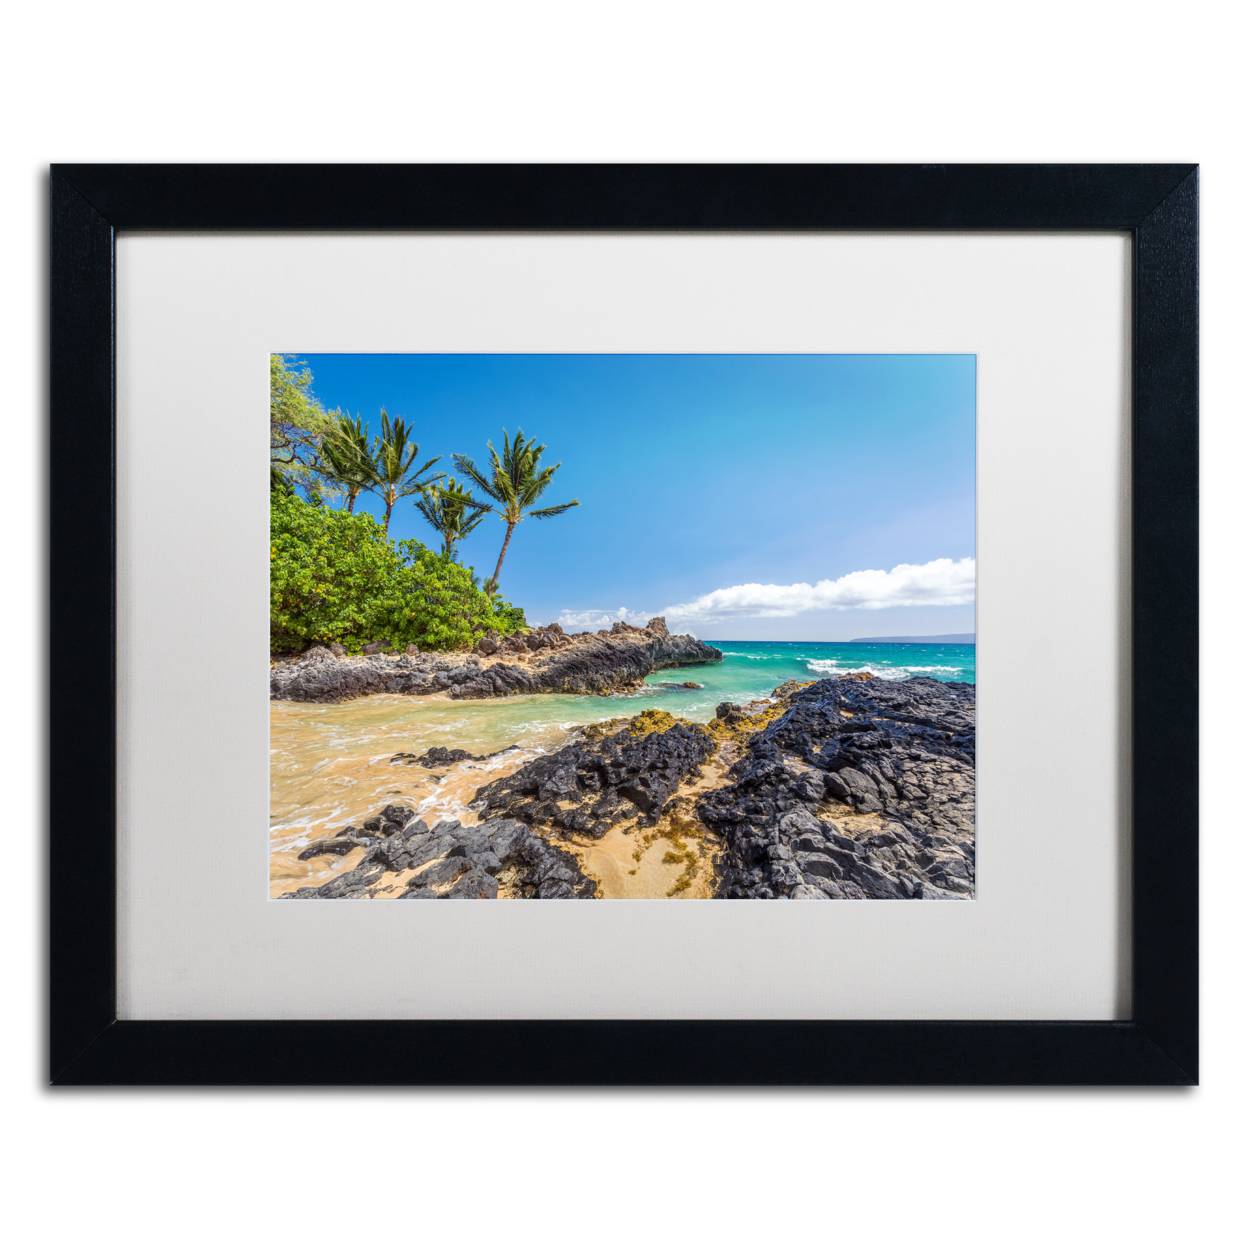 Pierre Leclerc 'Tropical Beach' Black Wooden Framed Art 18 X 22 Inches